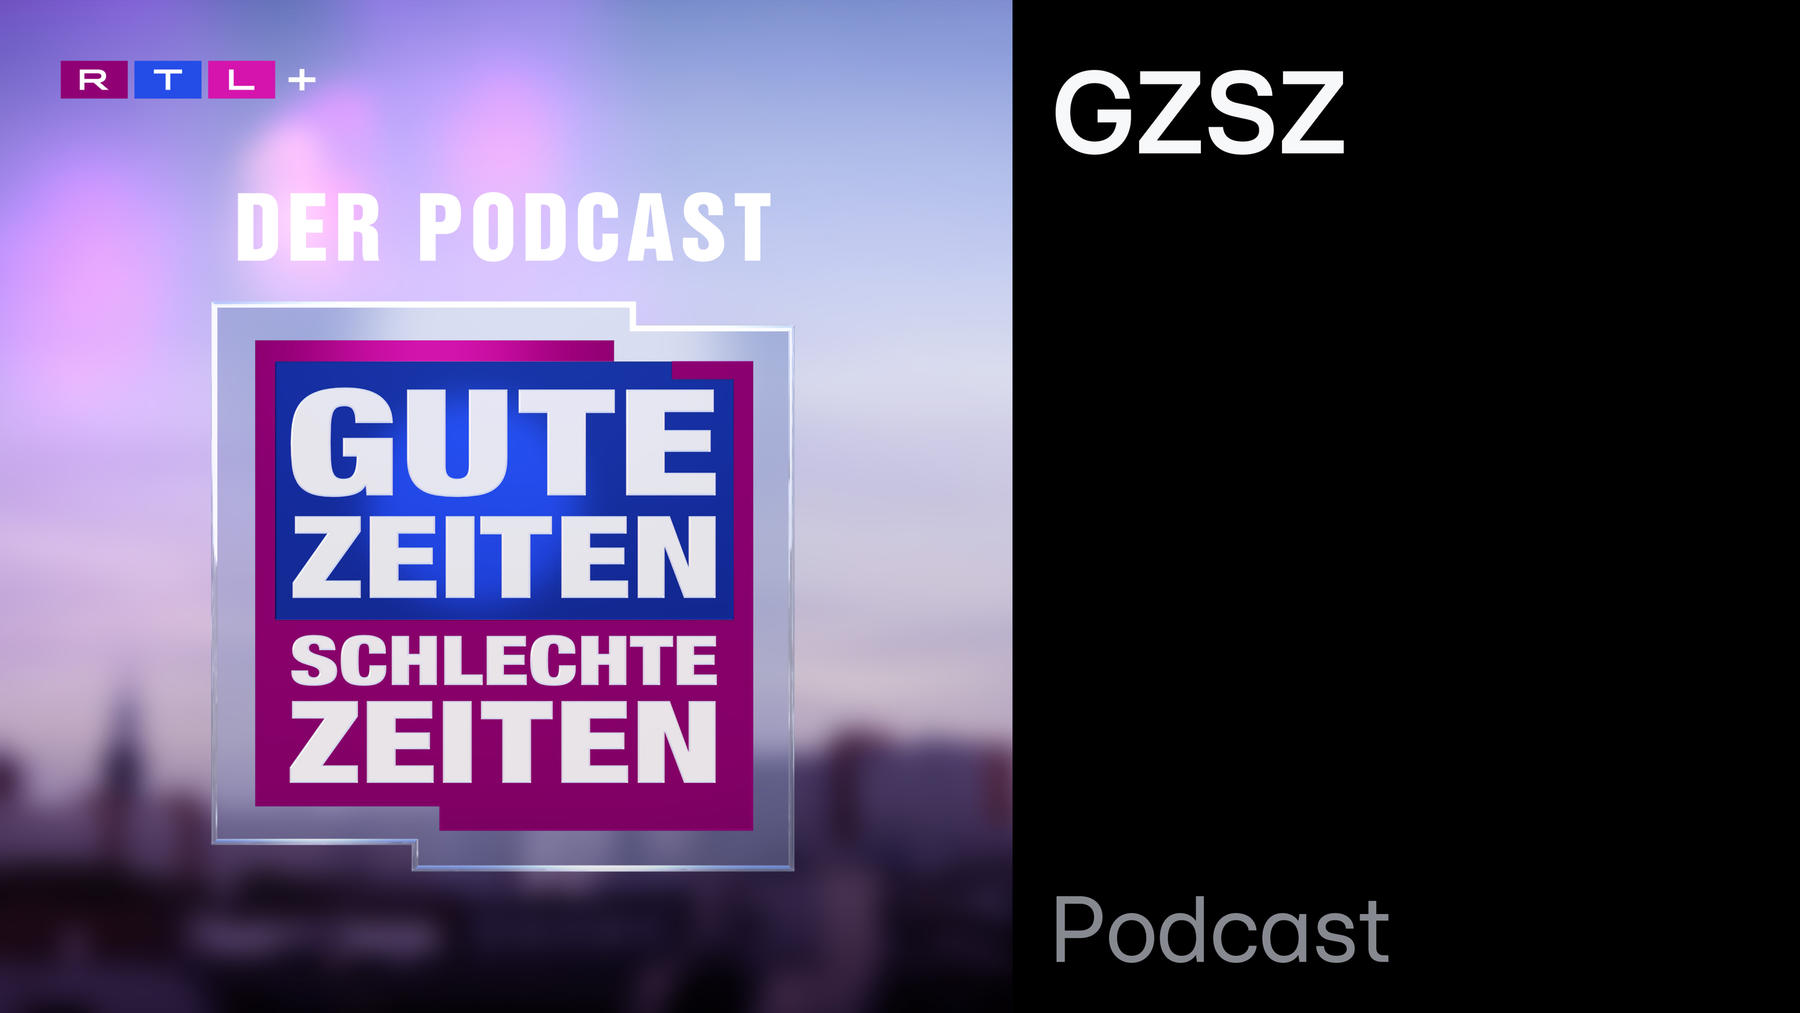 Podcast: GZSZ - Der offizielle Podcast